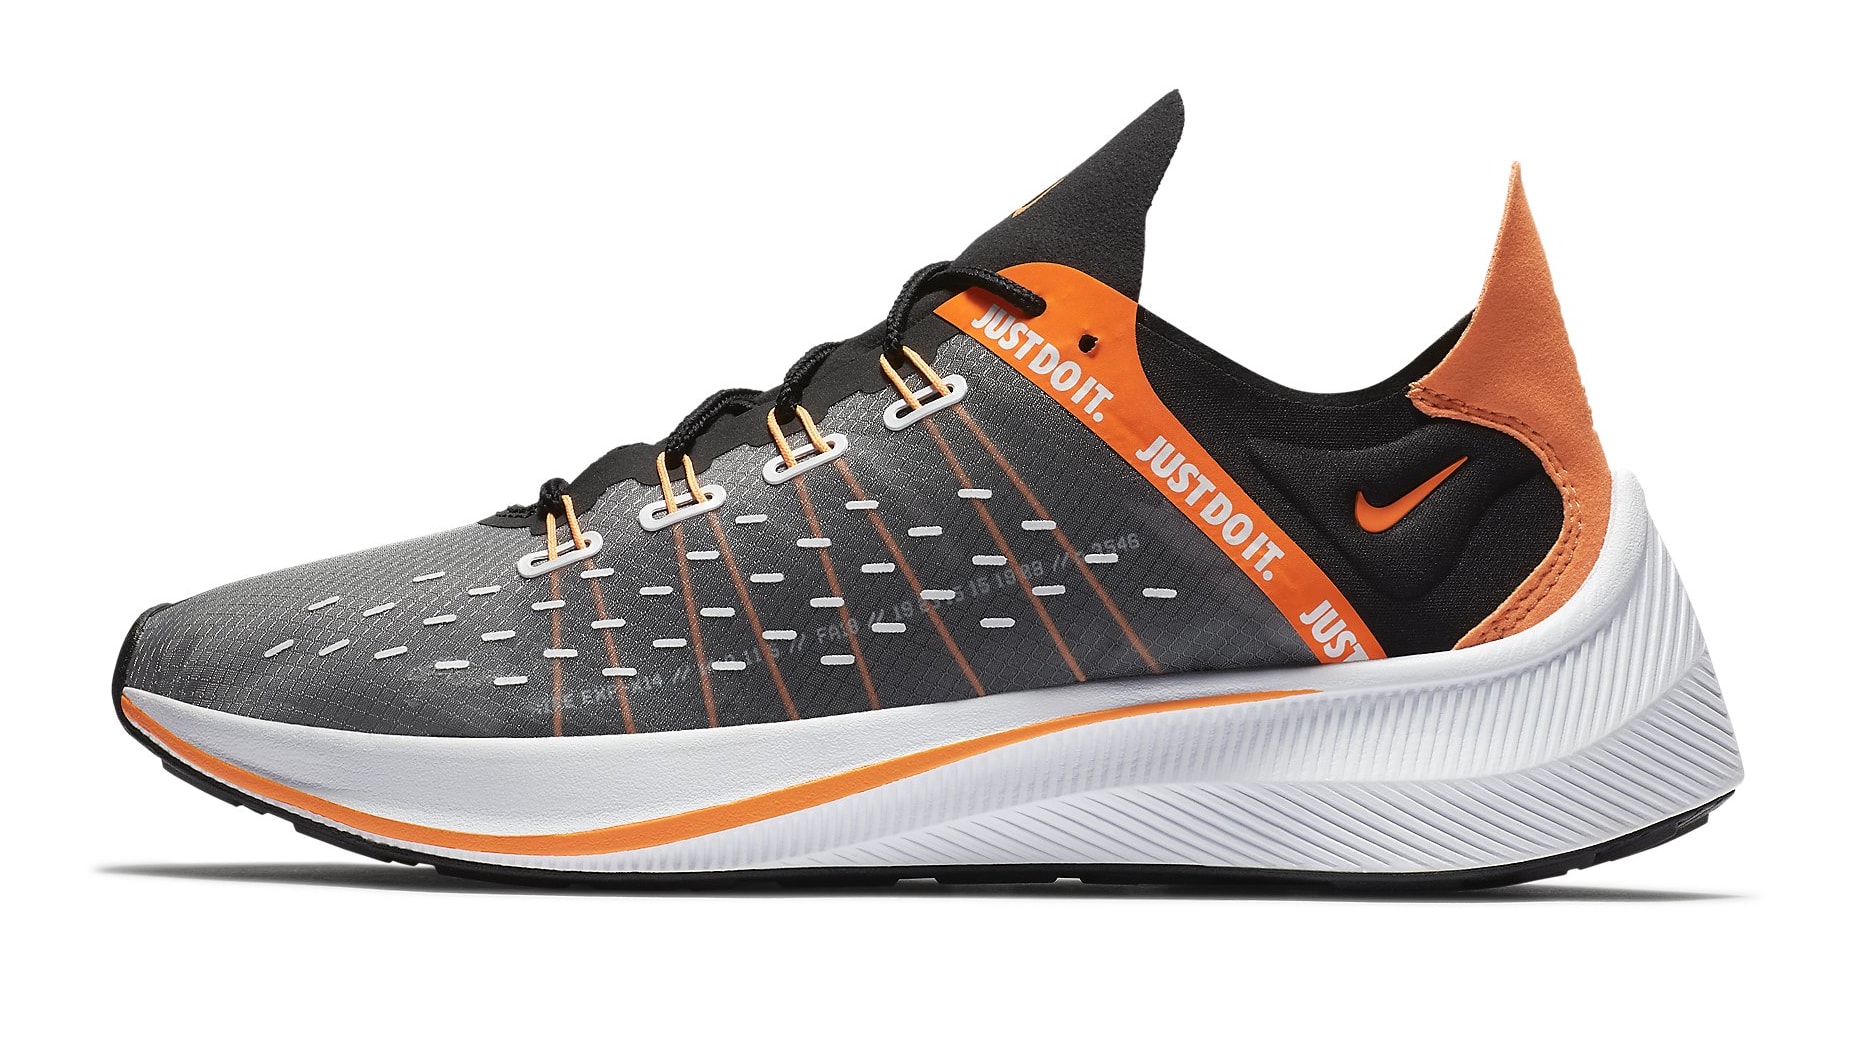 Nike exp-x14 grey white кроссовки легкие дышащие на лето